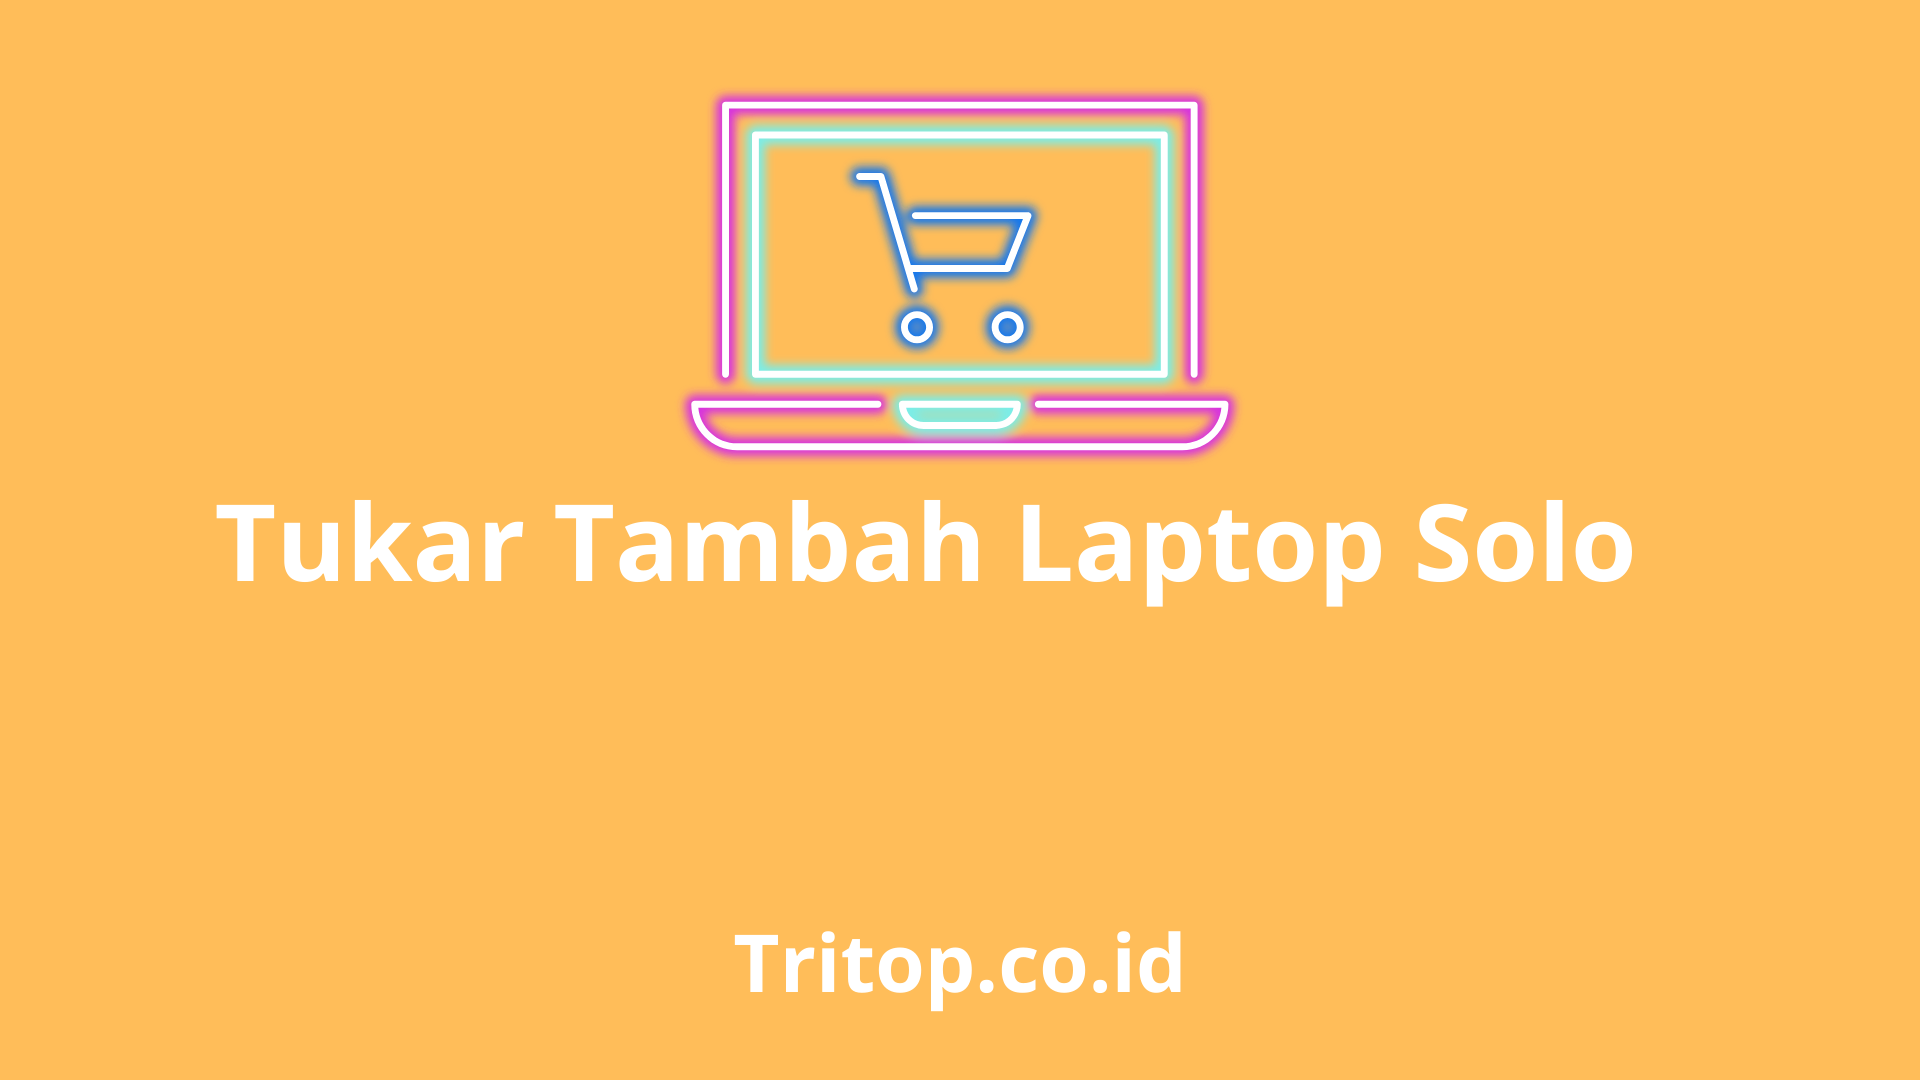 Tukar Tambah Laptop Solo tritop.co.id